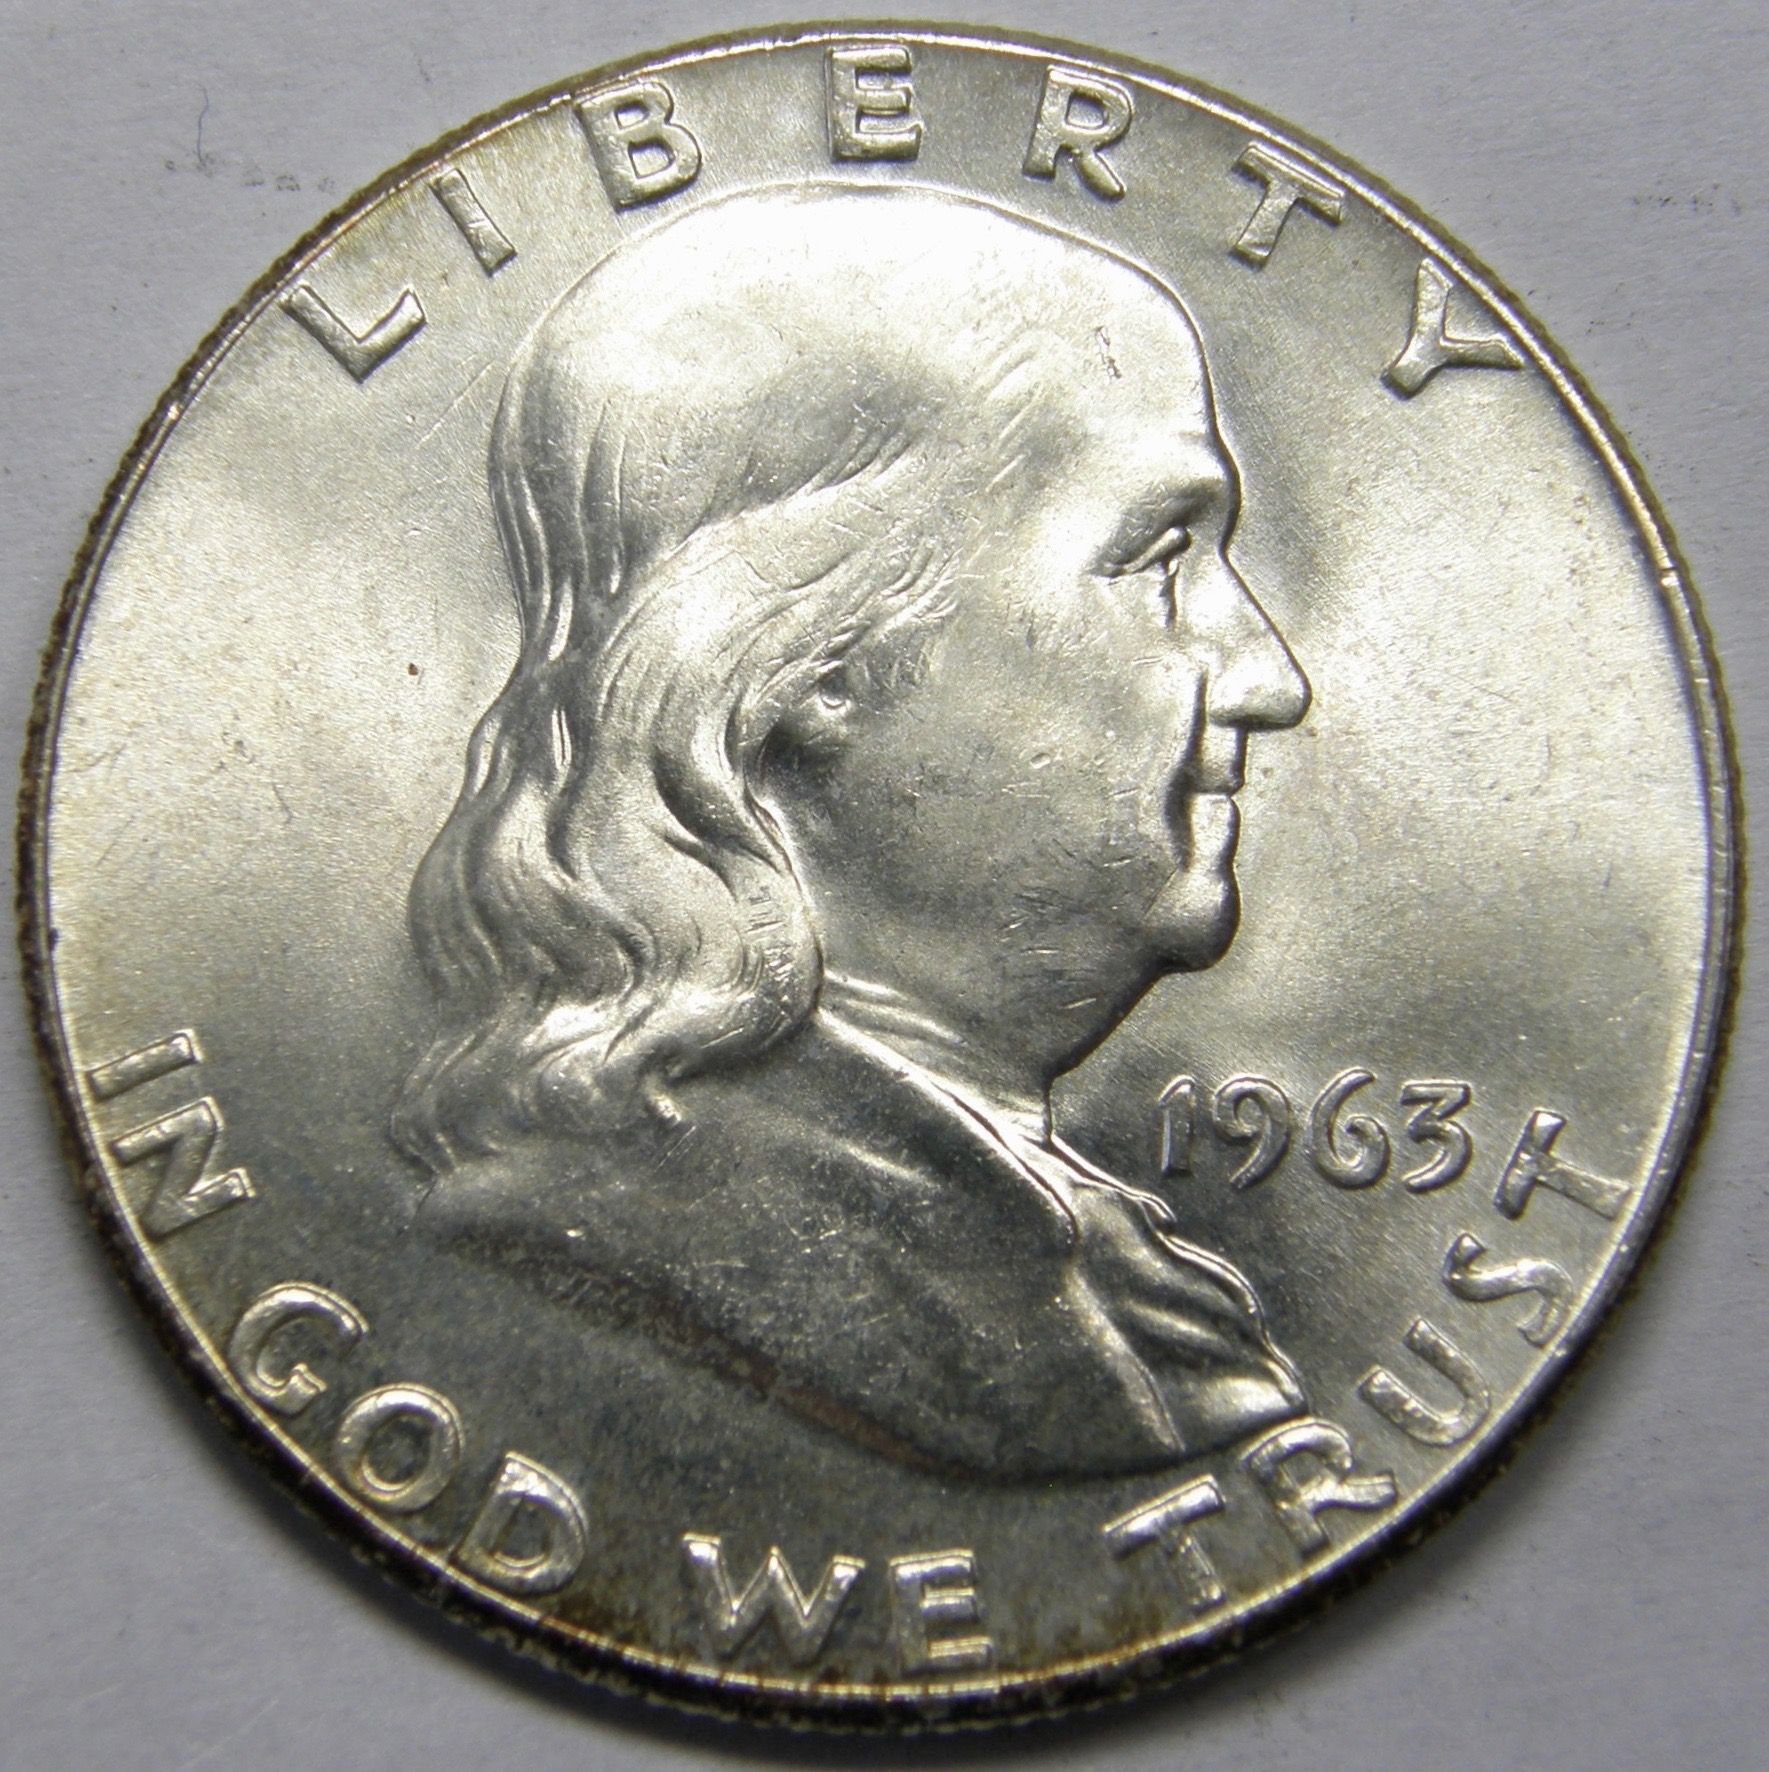 1963 P Franklin Half Dollar #5LE - for sale, buy now online - Item #137601